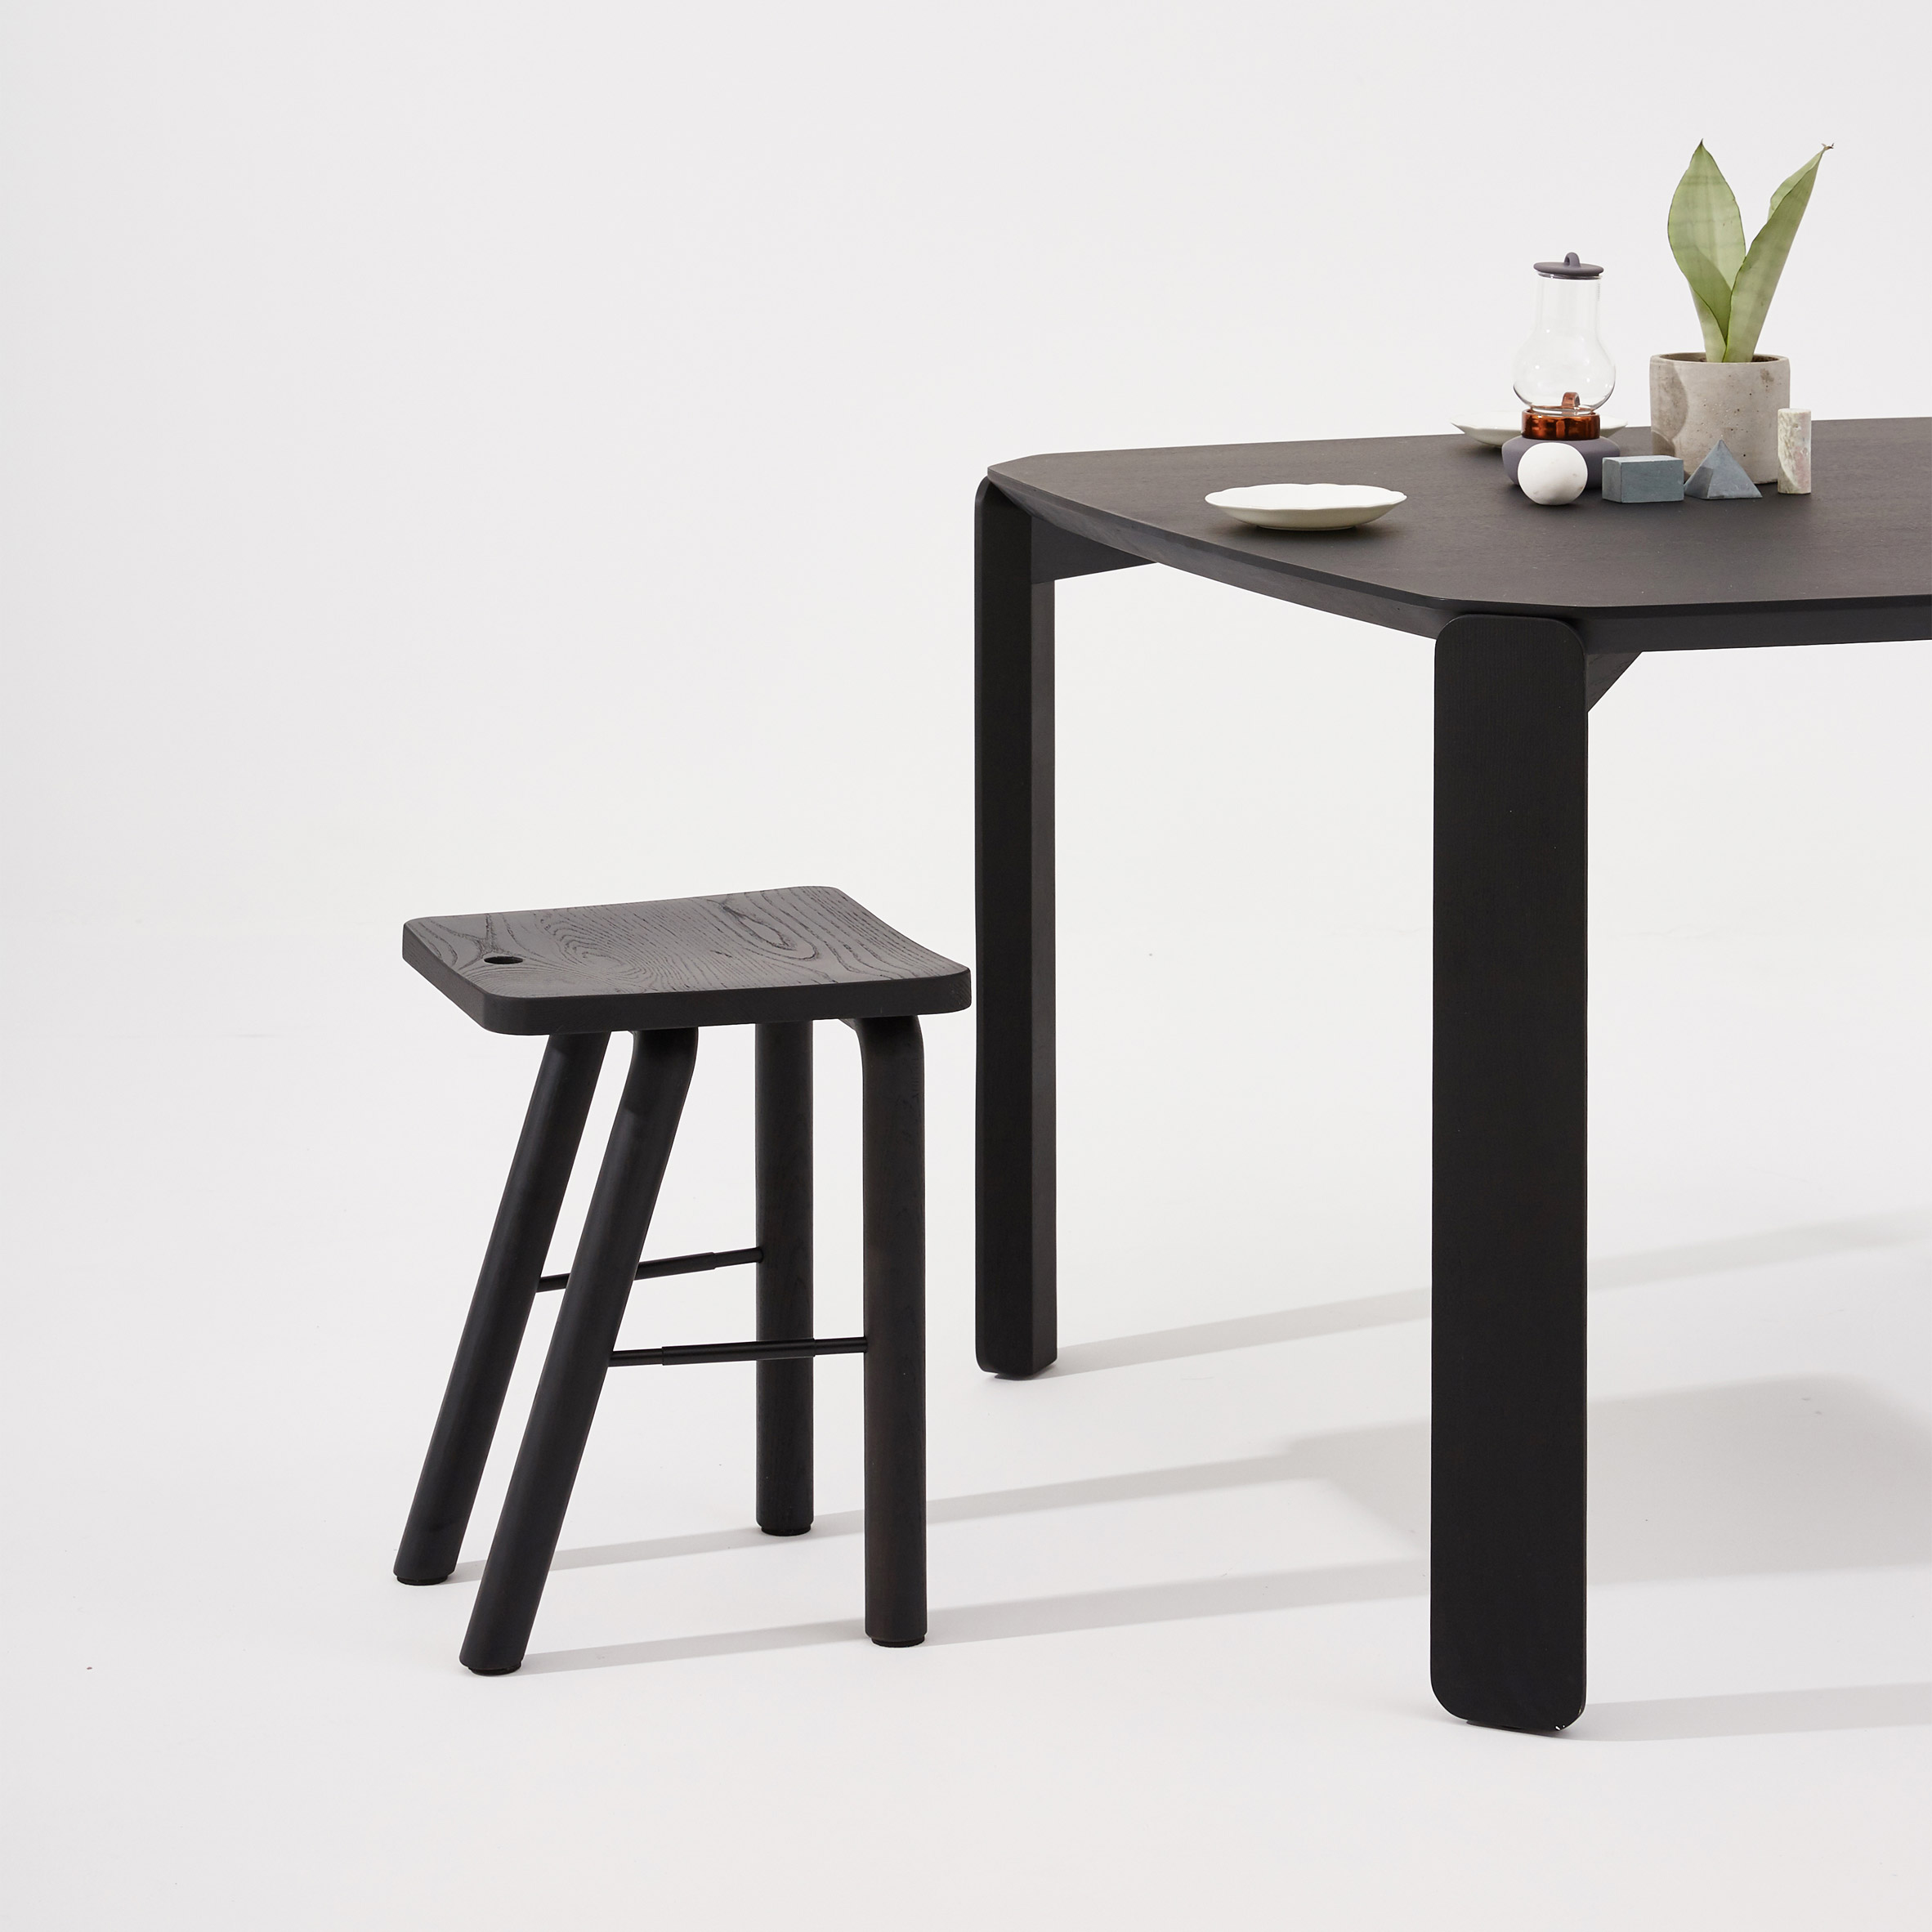 45-table-system-inyard-la-selva-design-furniture_dezeen_2364_col_9